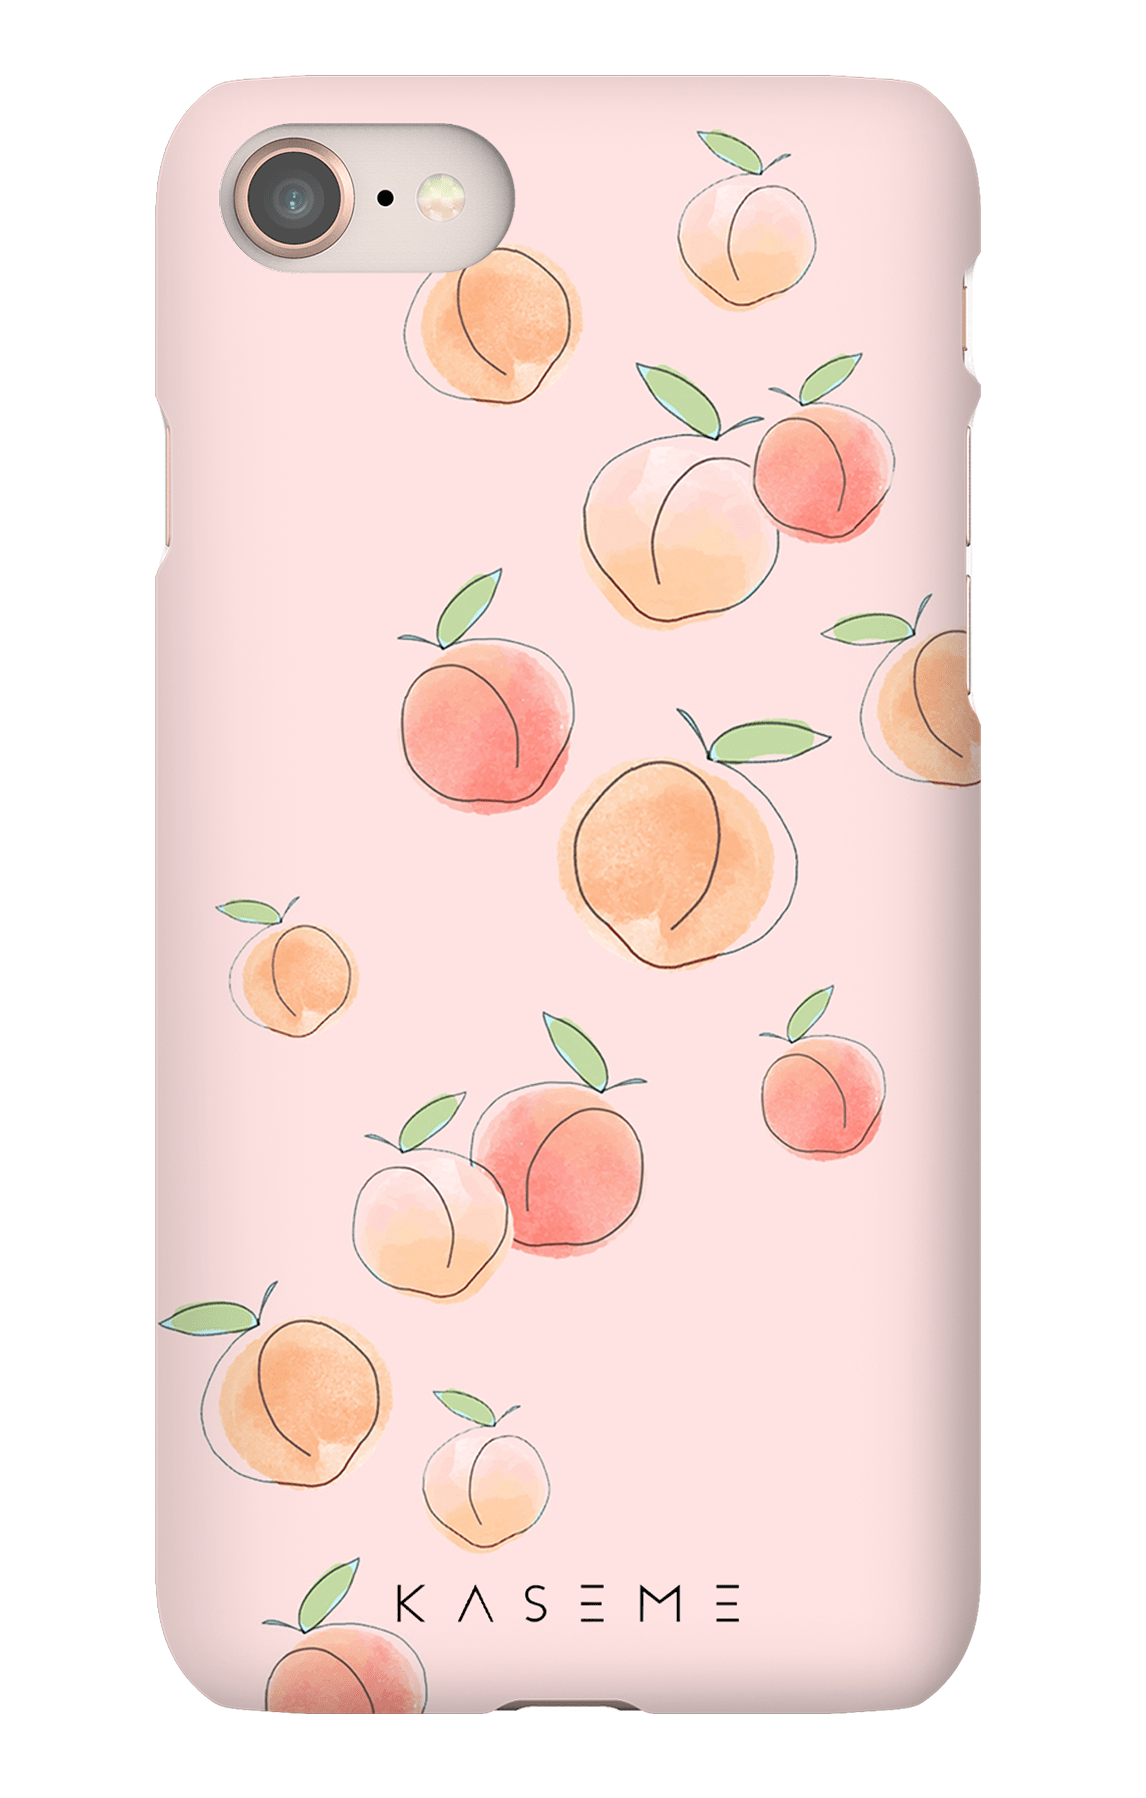 Peachy pink - iPhone SE 2020